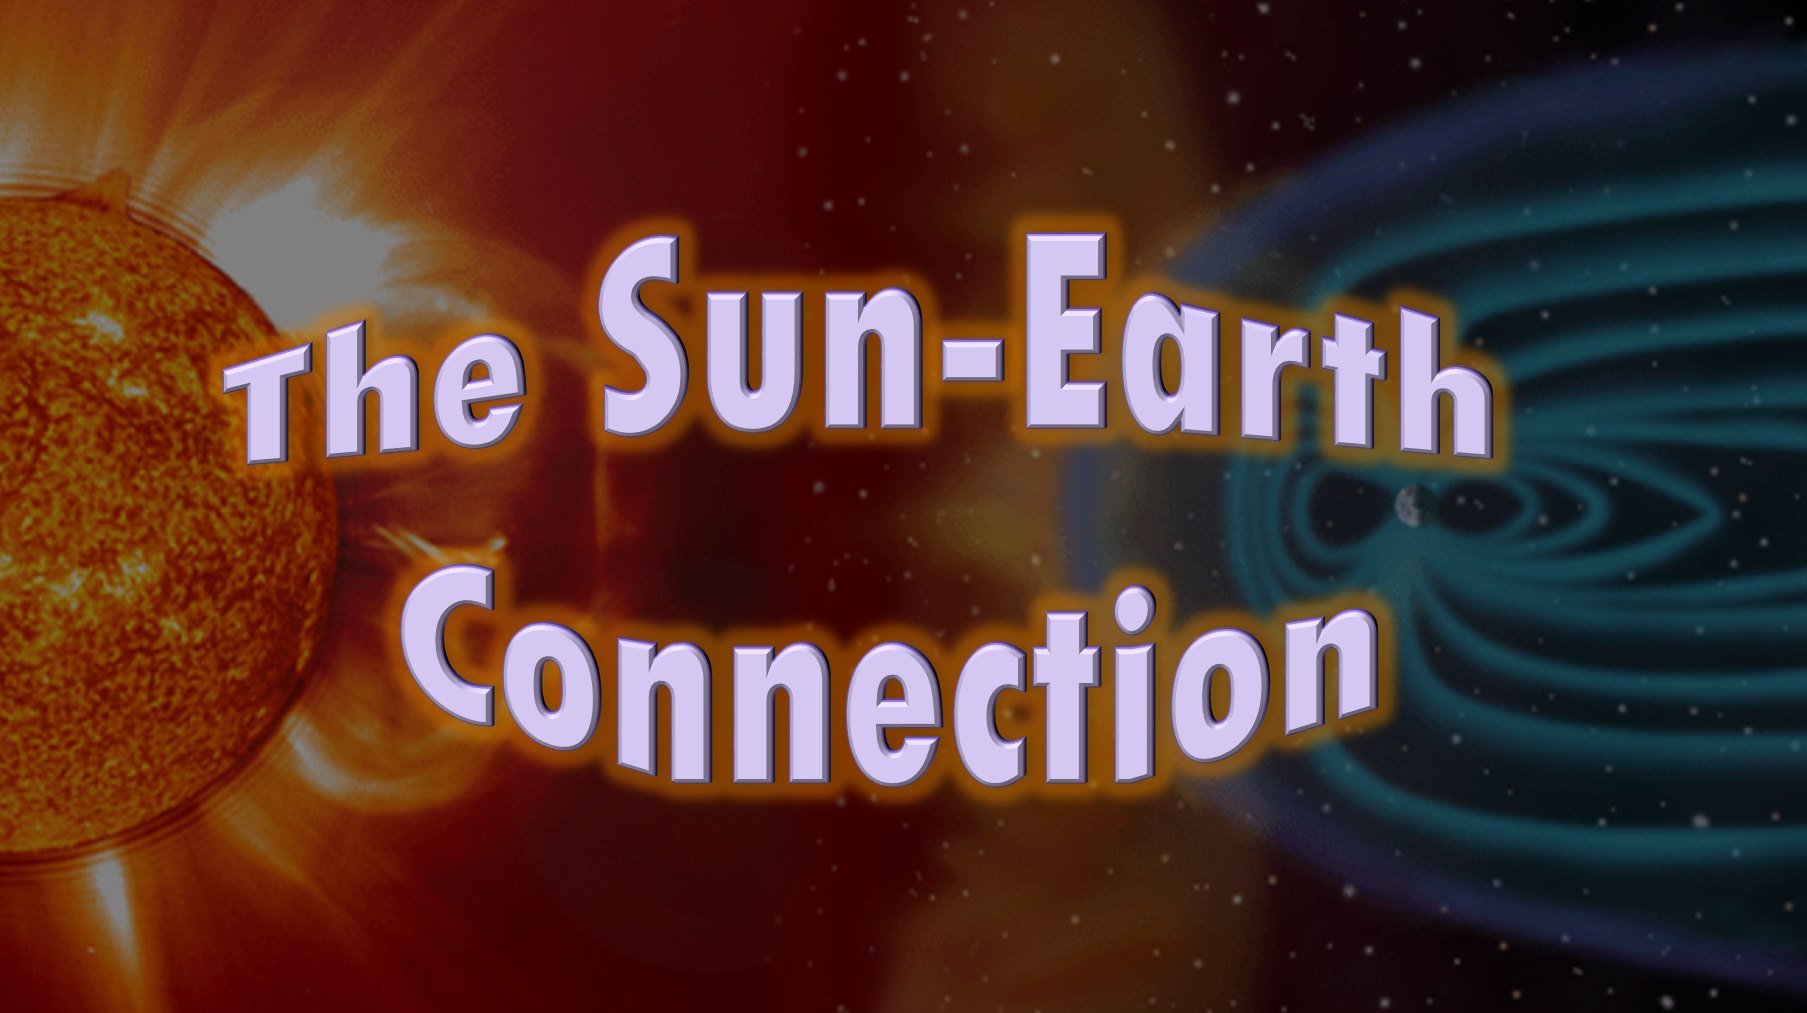 The Sun-Earth Connection SPOT Show